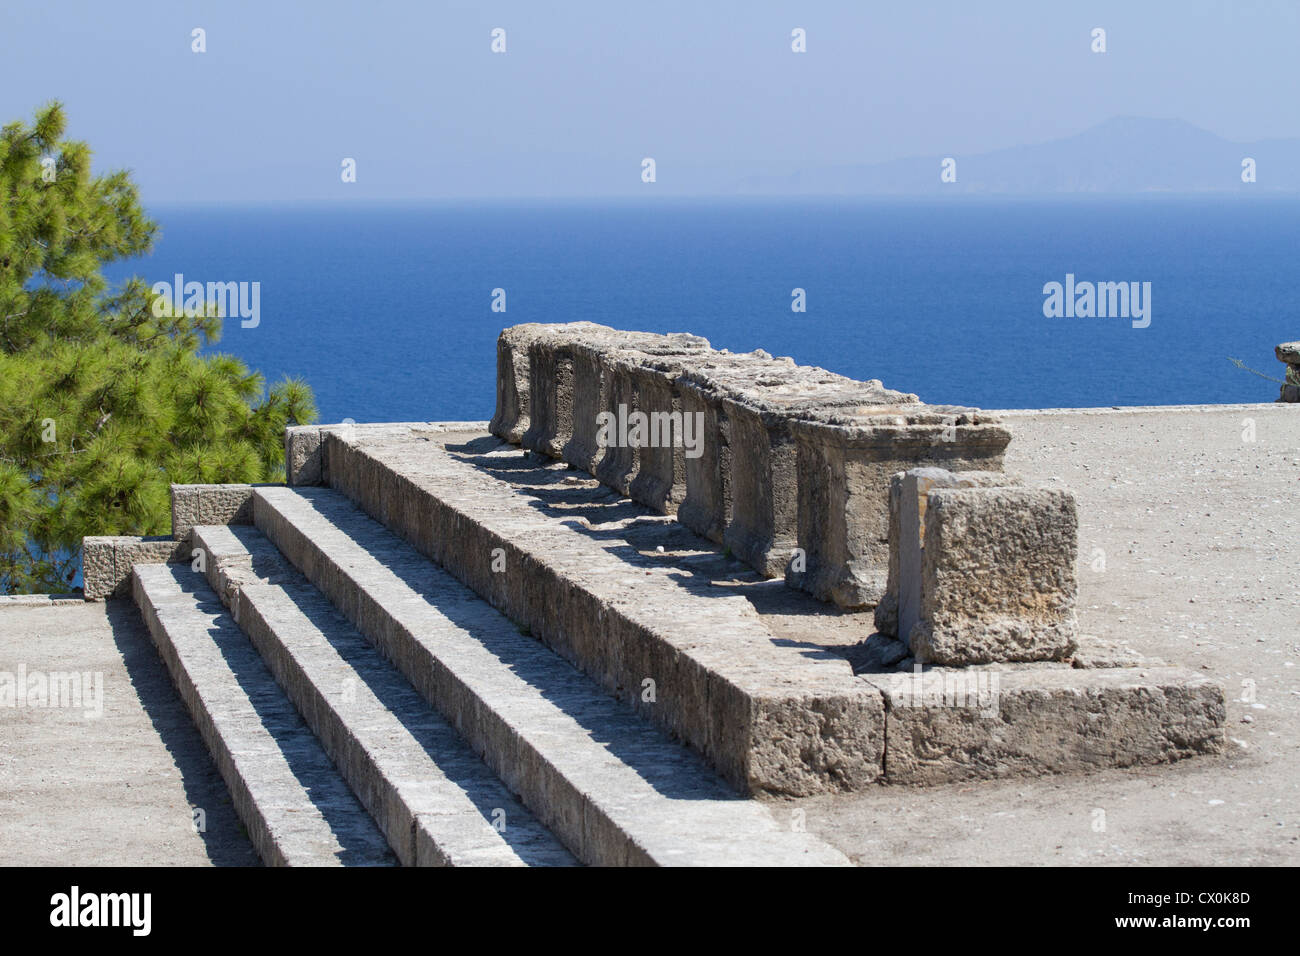 Views from Ancient Kamiros on the island of Rhodes, Aegean, Mediterranean. Stock Photo